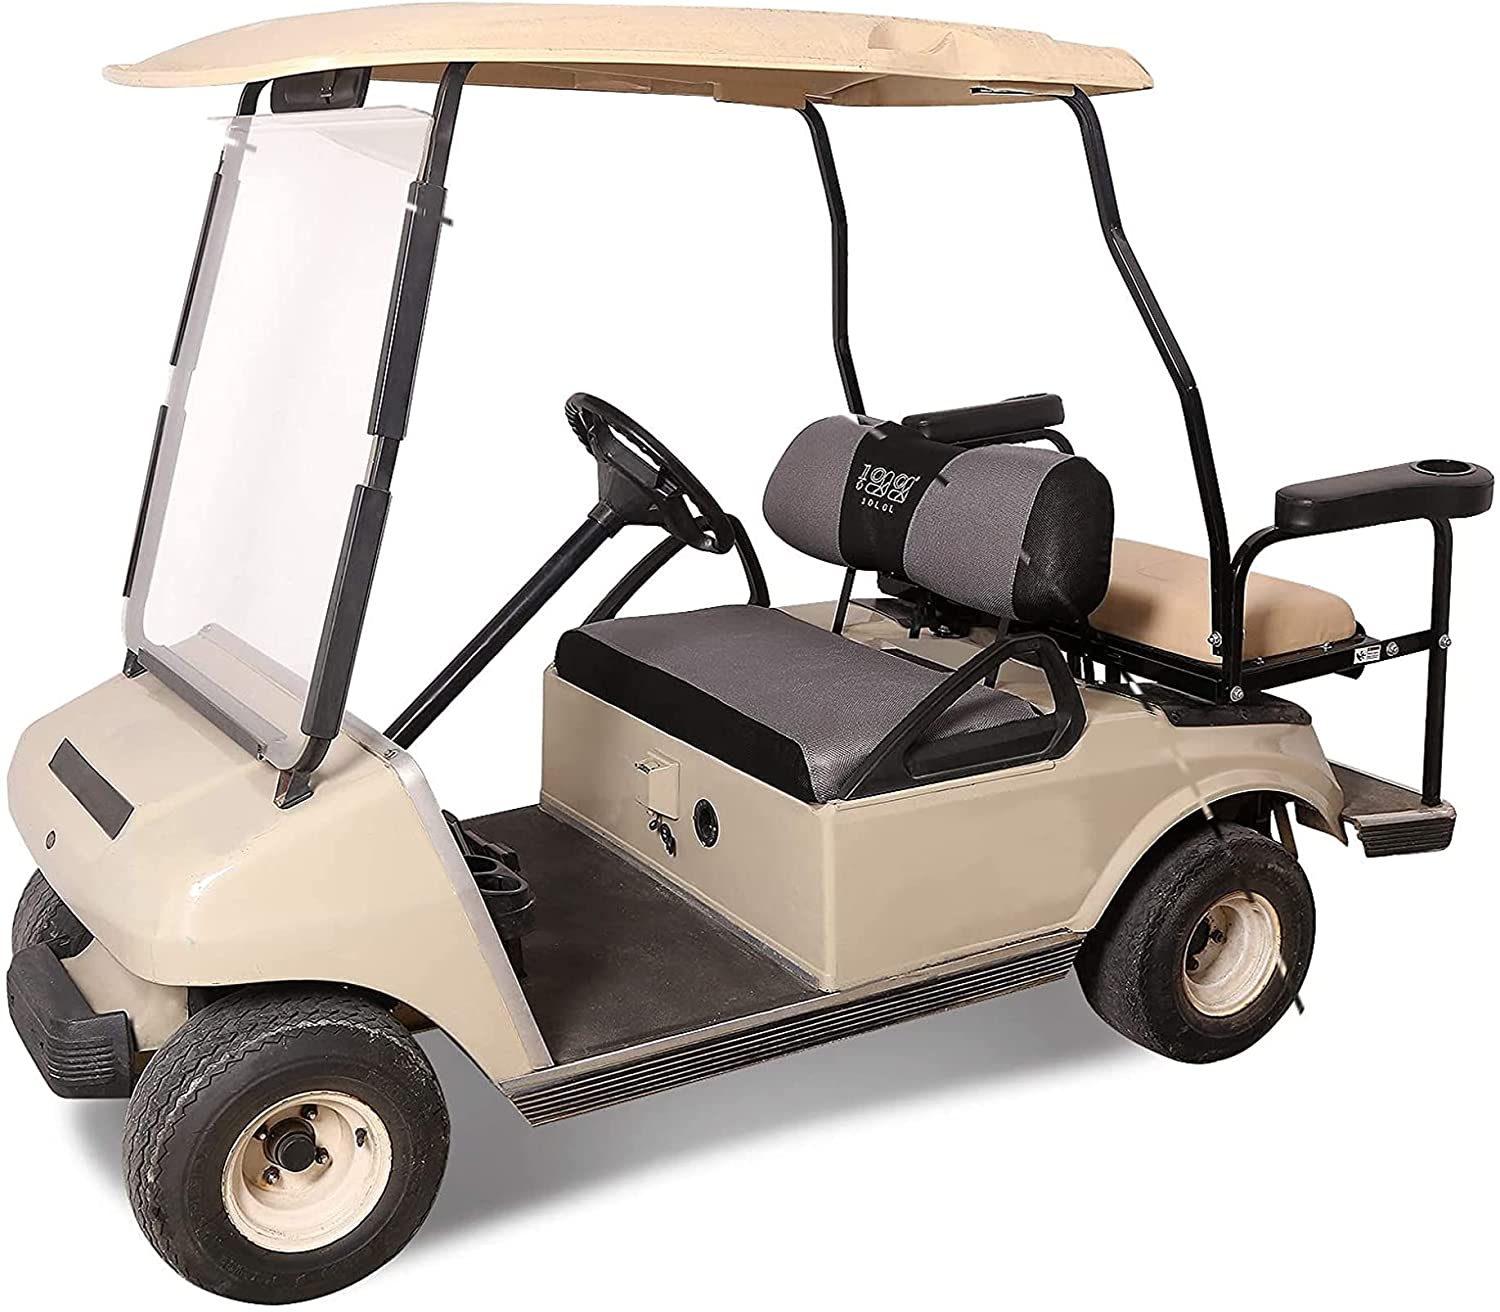 10L0L Golf Cart Seat Cover Fit Club Car Precedent Yamaha, Washable